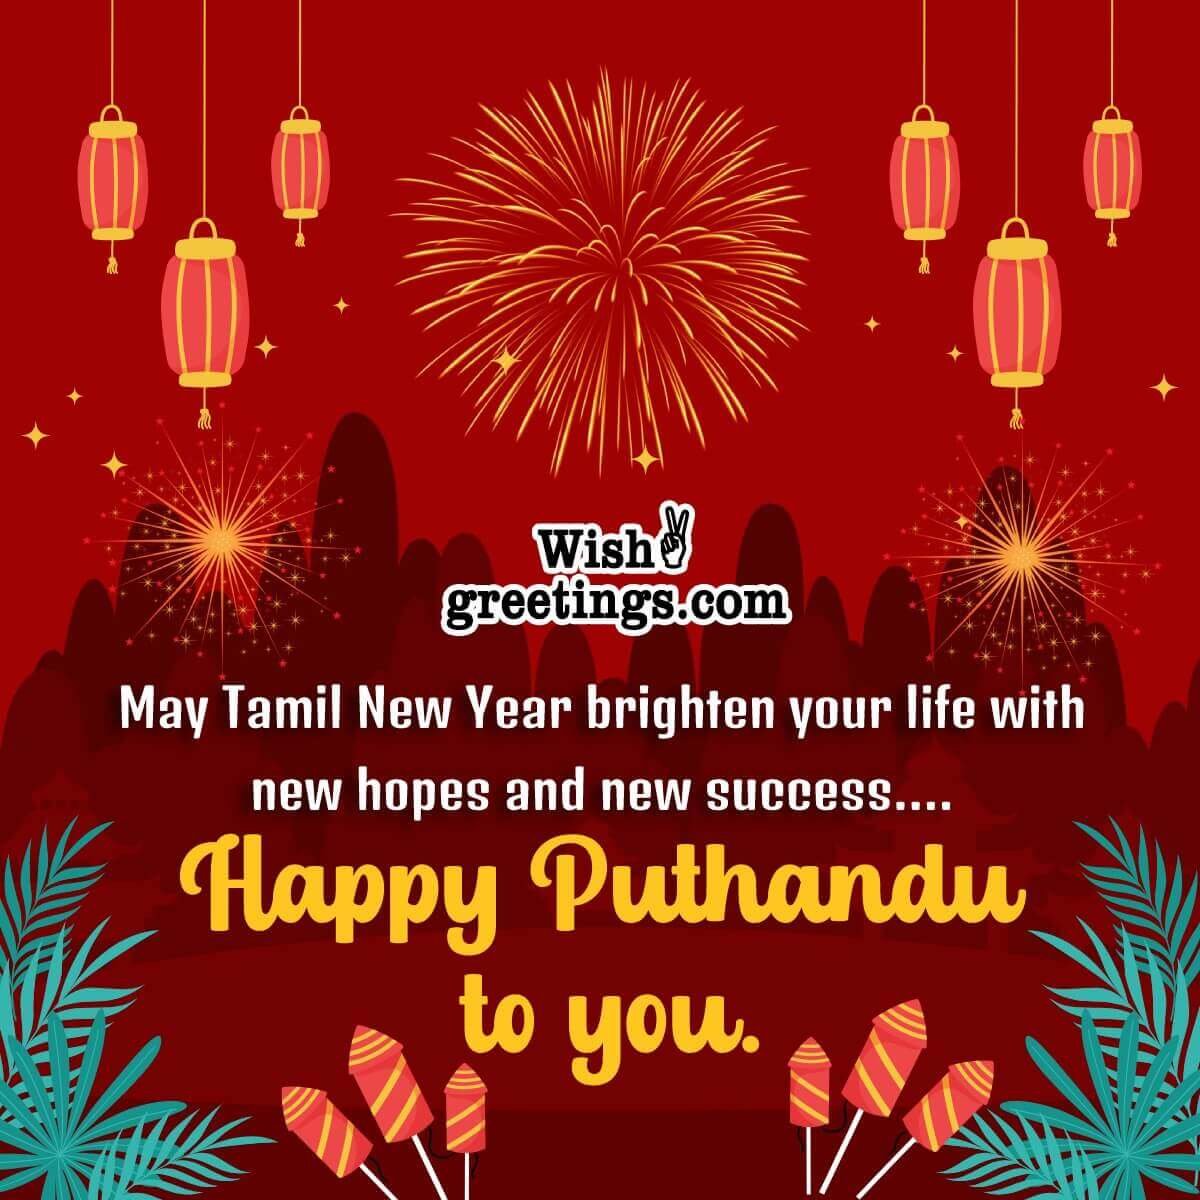 Happy Puthandu Wish Image For Friends